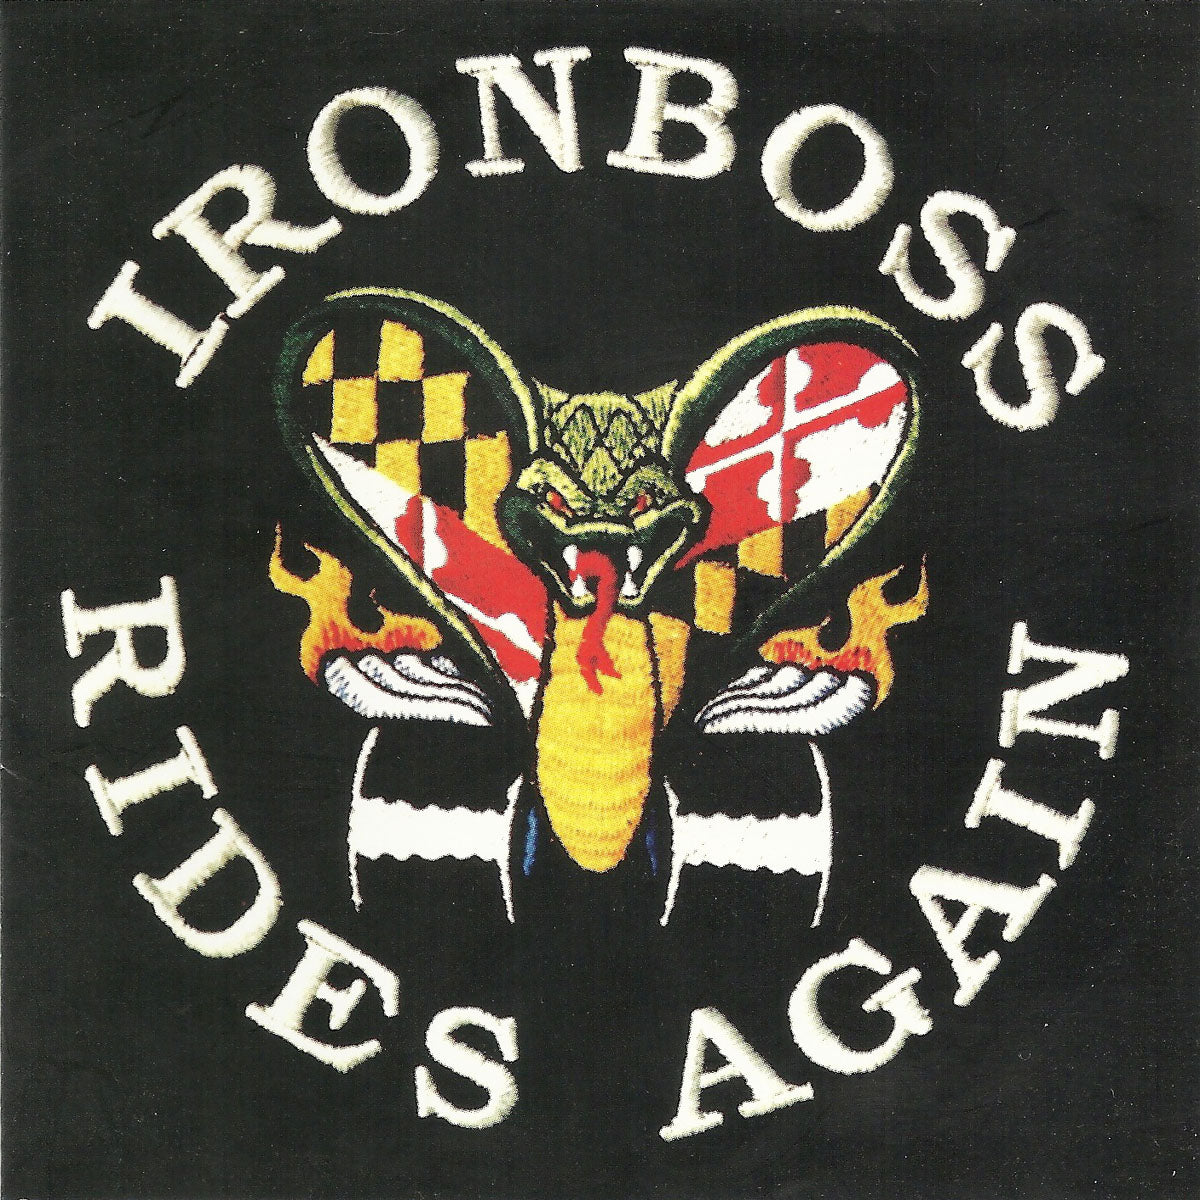 Ironboss- Rides Again CD ~NASHVILLE PUSSY!